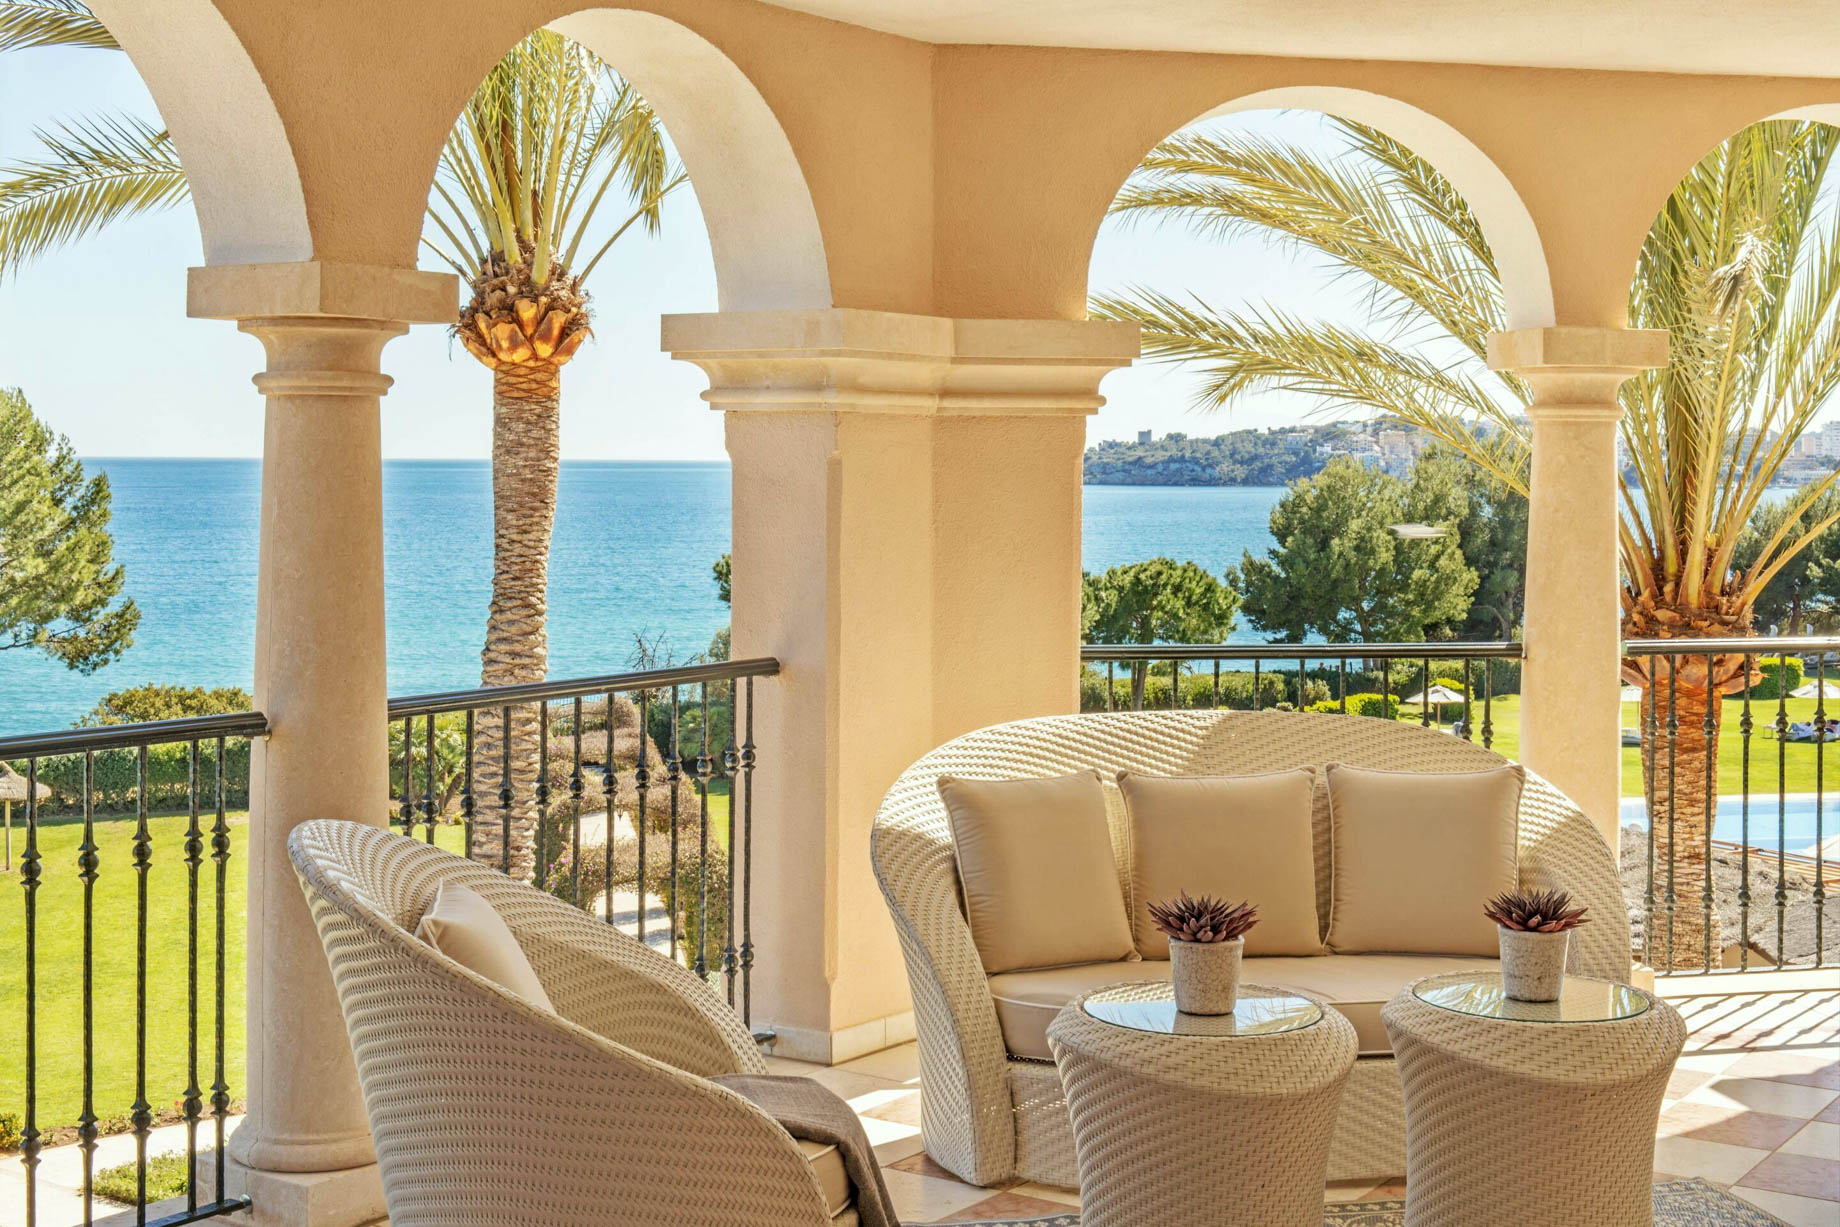 The St. Regis Mardavall Mallorca Resort – Palma de Mallorca, Spain – Mardavall Diamond Suite Terrace Ocean View